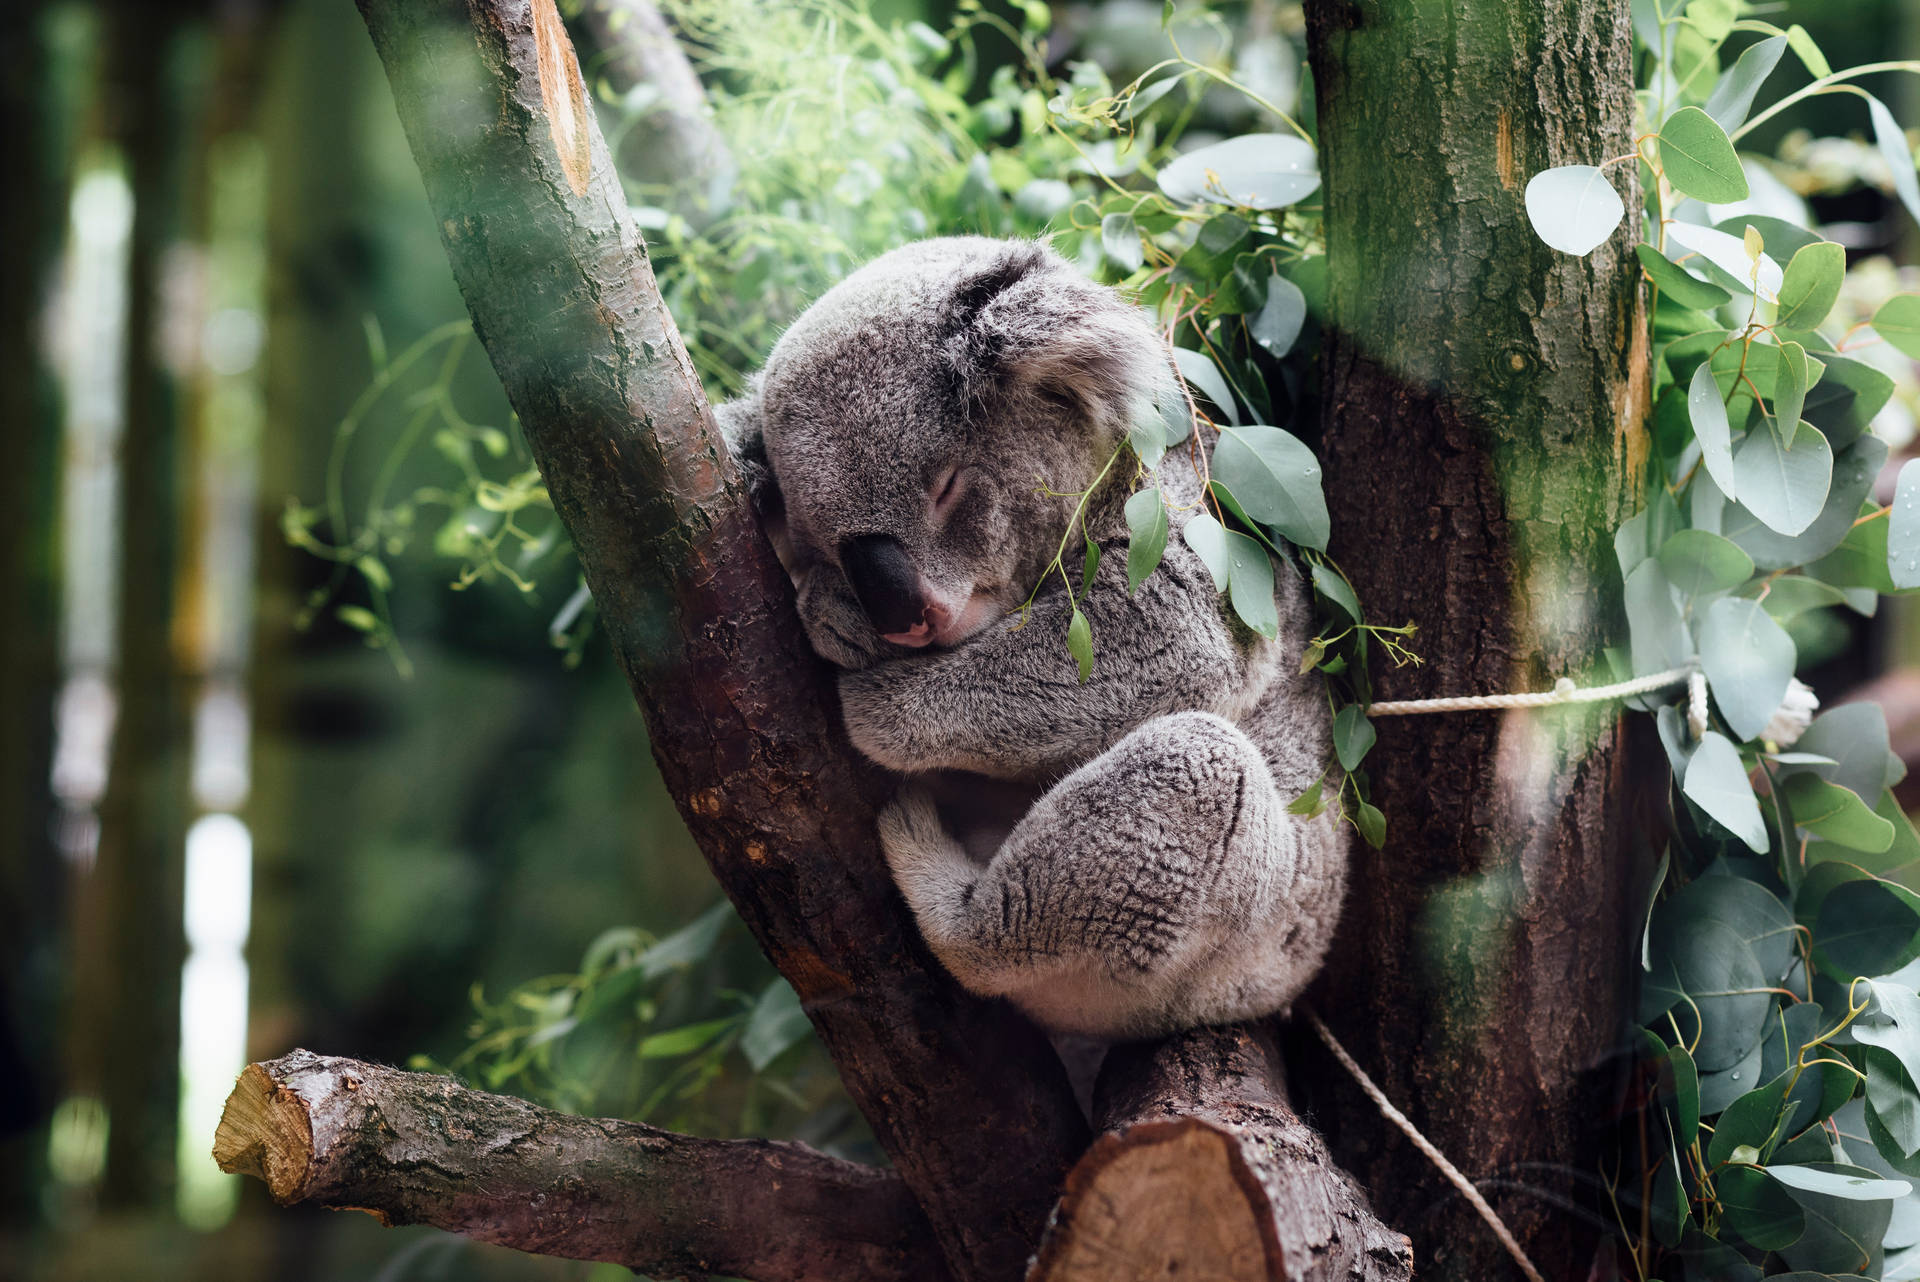 Caption: Adorable Koala Resting Comfortably On A Eucalyptus Branch Background